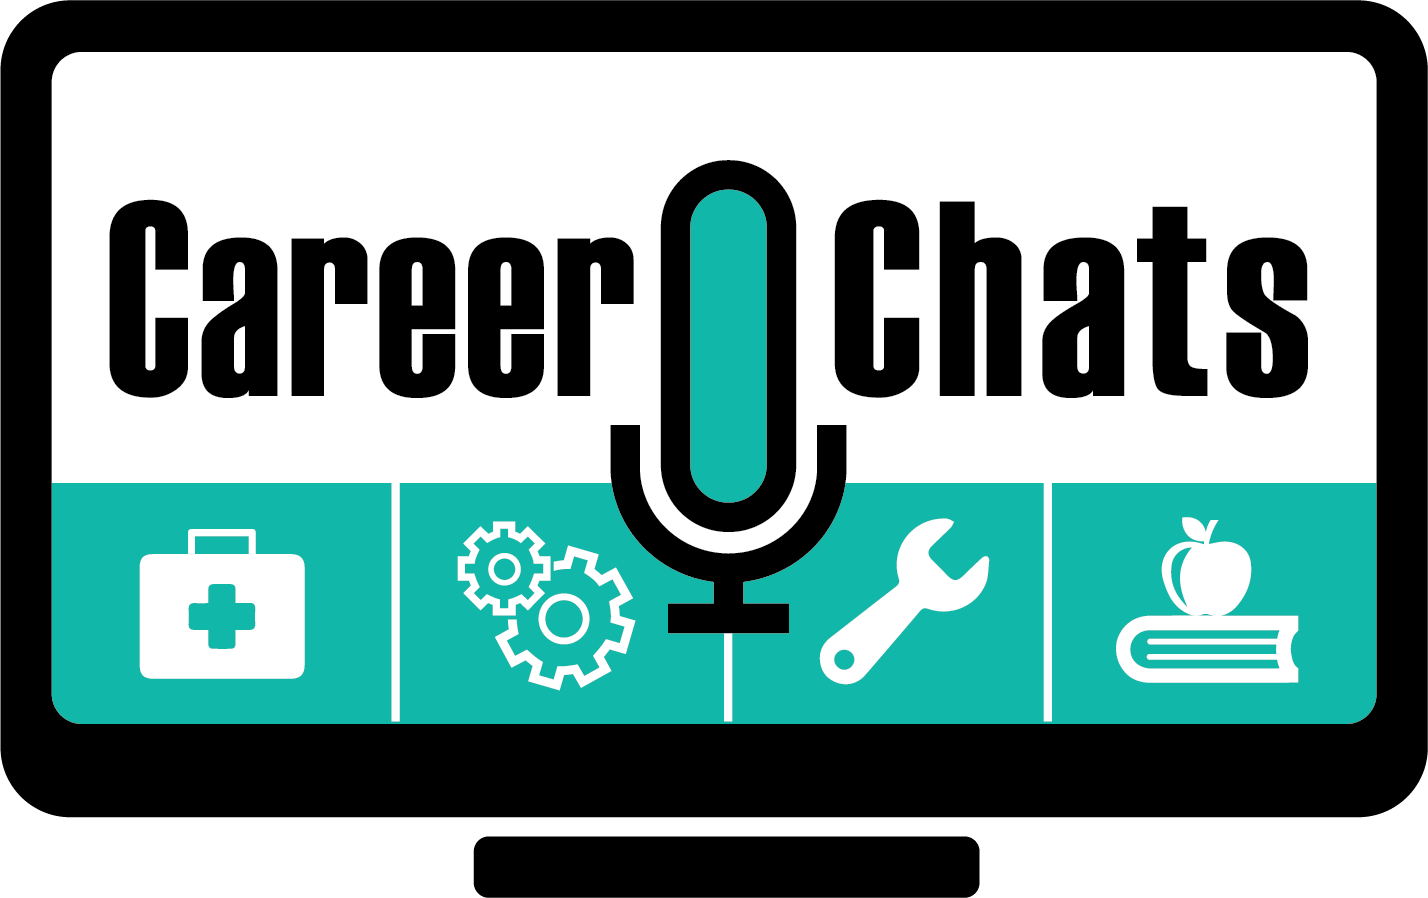 Career Chats Logo